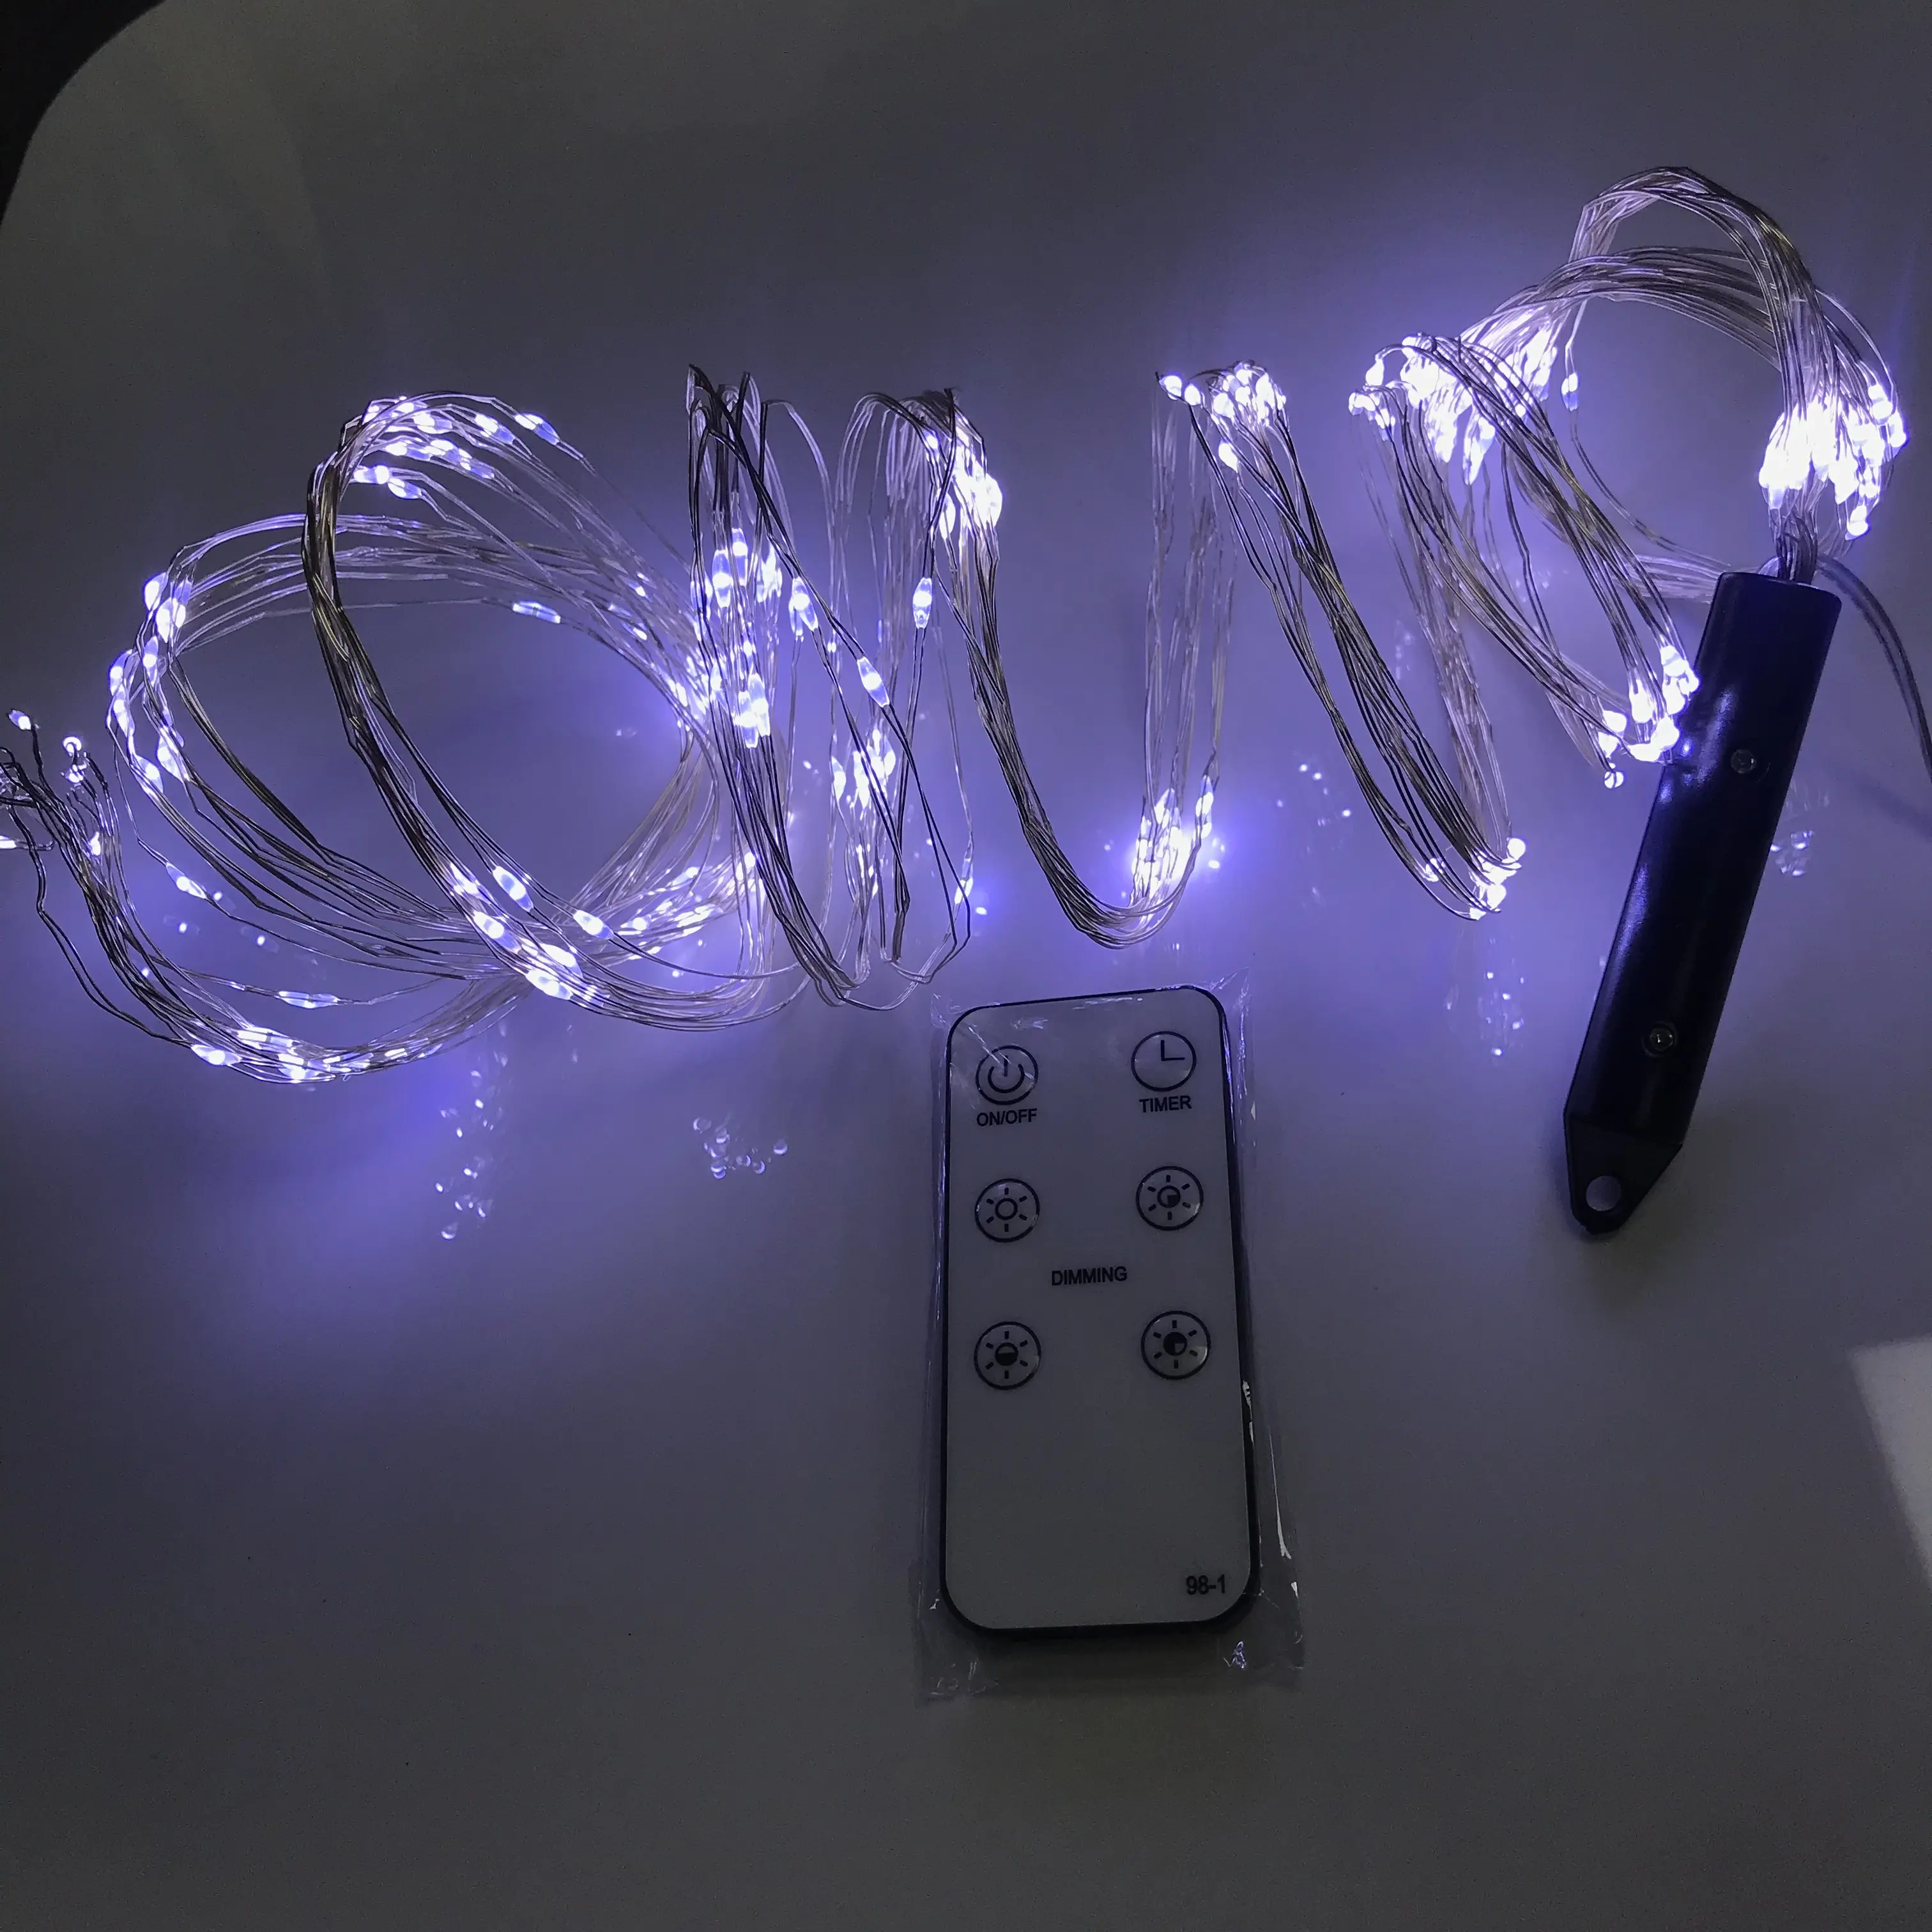 Decoration Light Outdoor Decor 20m 200leds Copper Wire Remote Control Xmas LED String Fairy Light